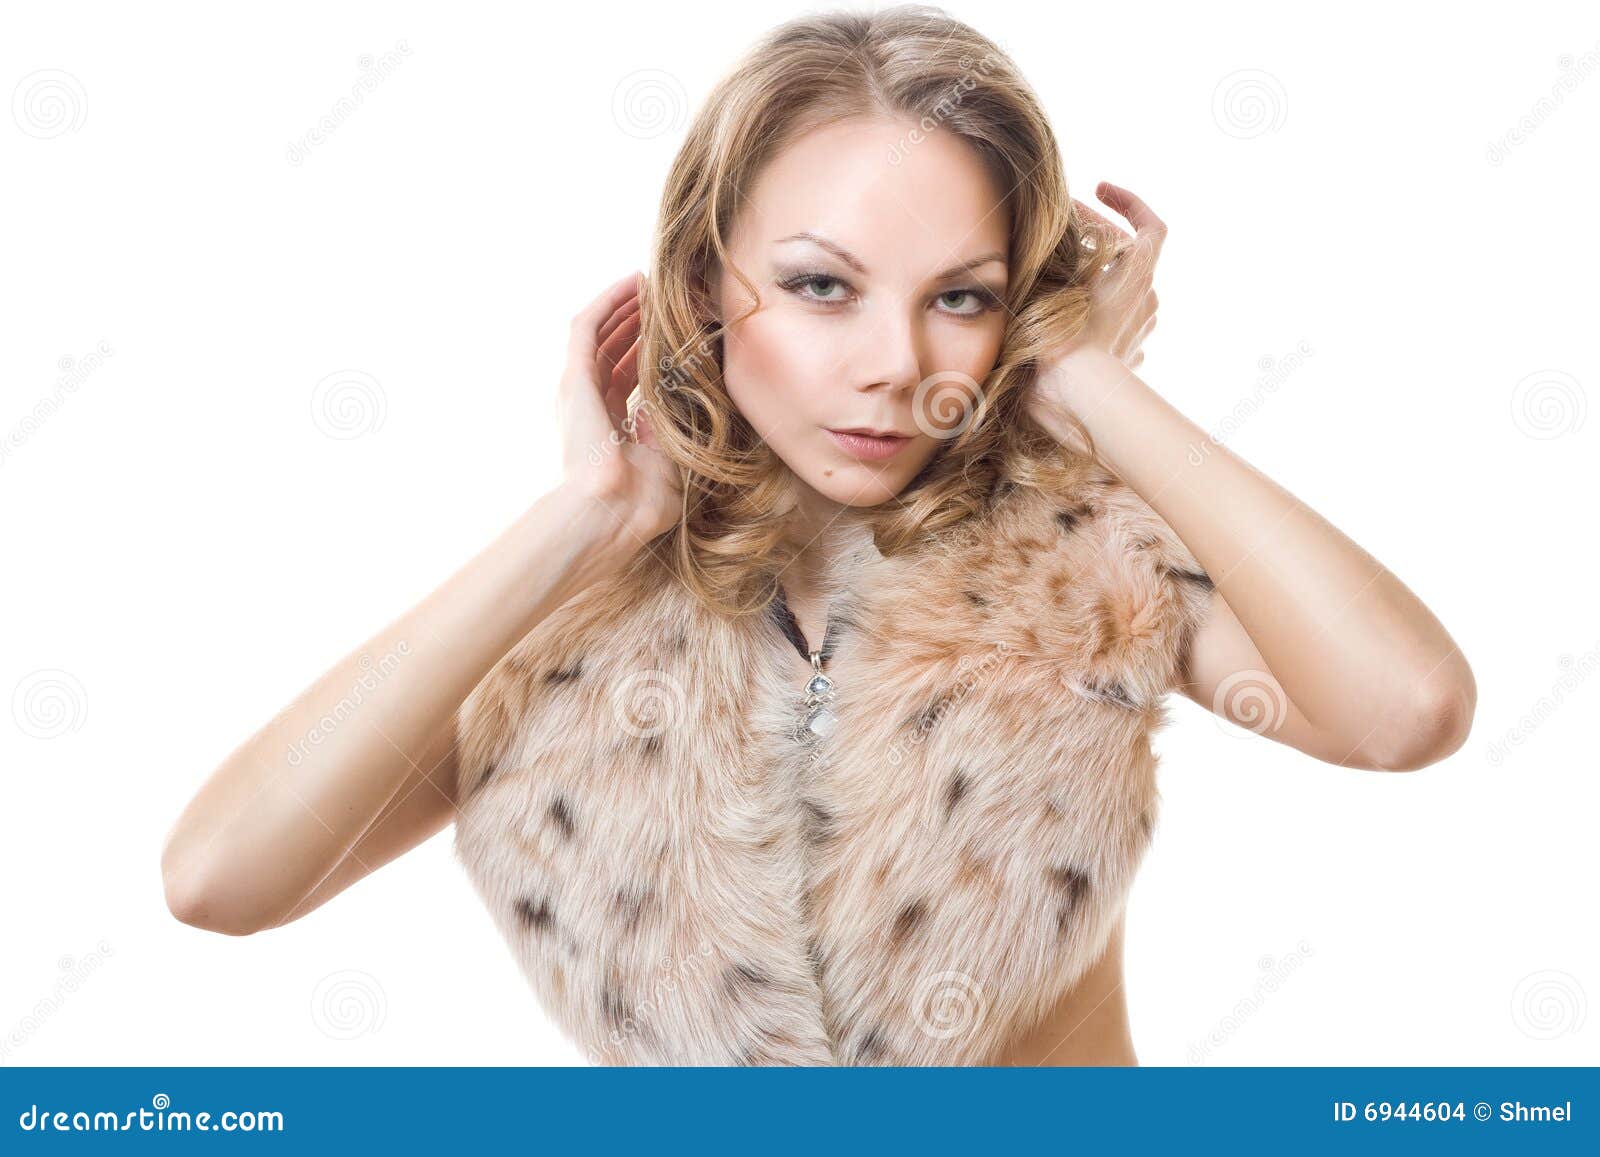 High fashion shoot stock photo. Image of feminine, girl